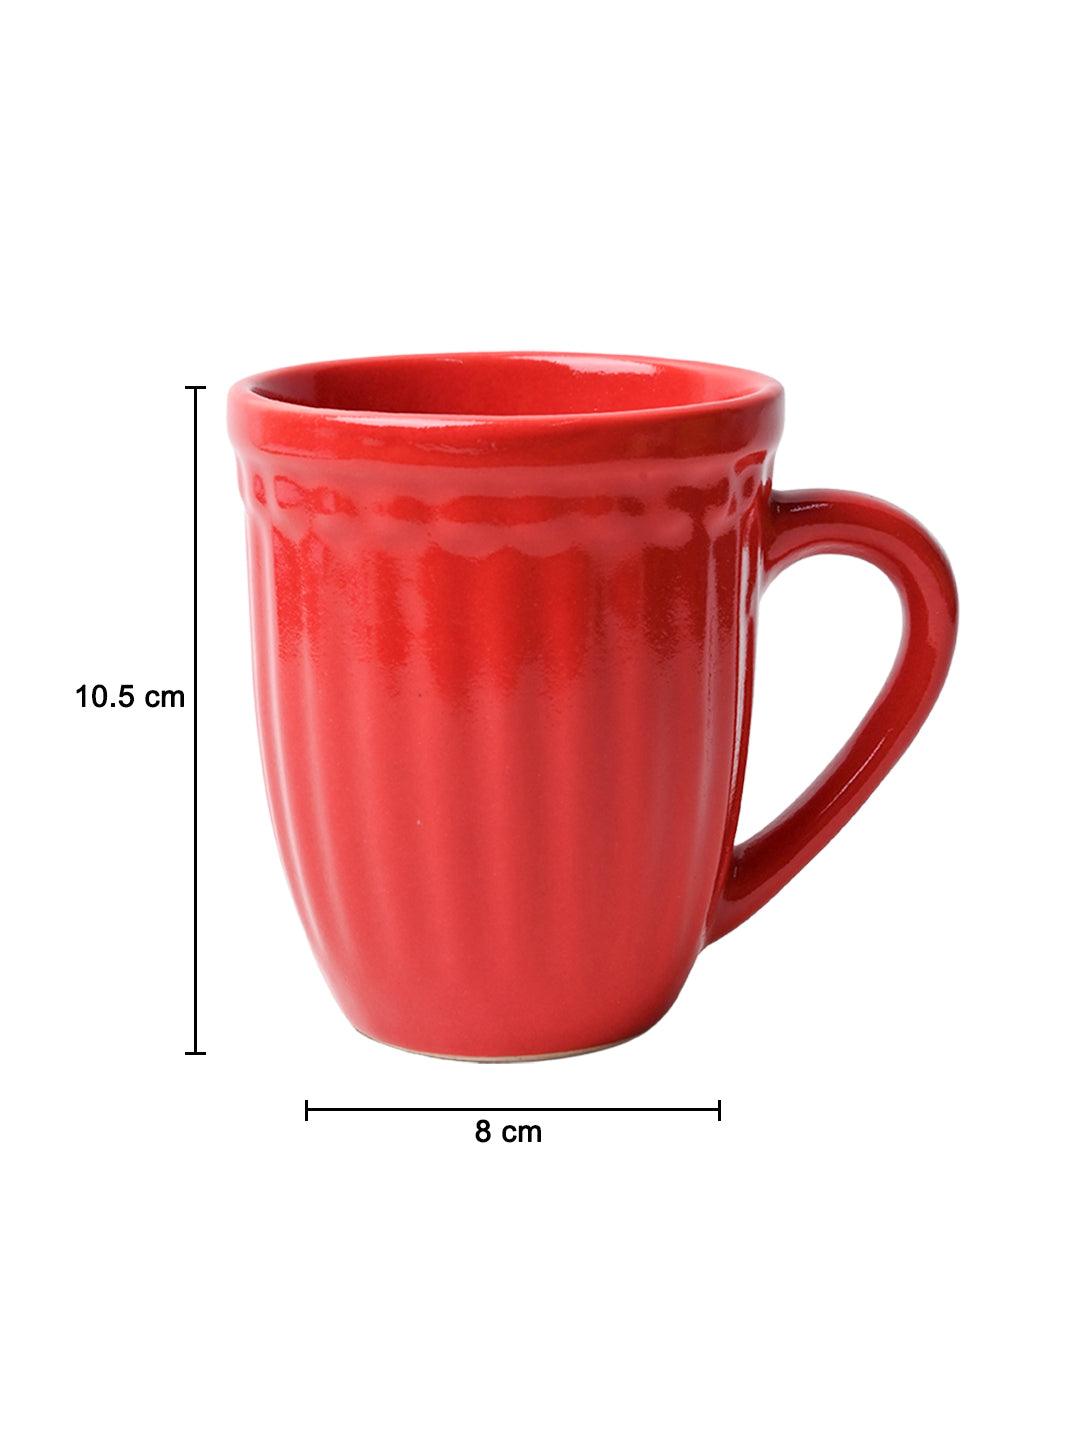 VON CASA Ceramic Coffee & Tea Mug - 300 Ml, Red